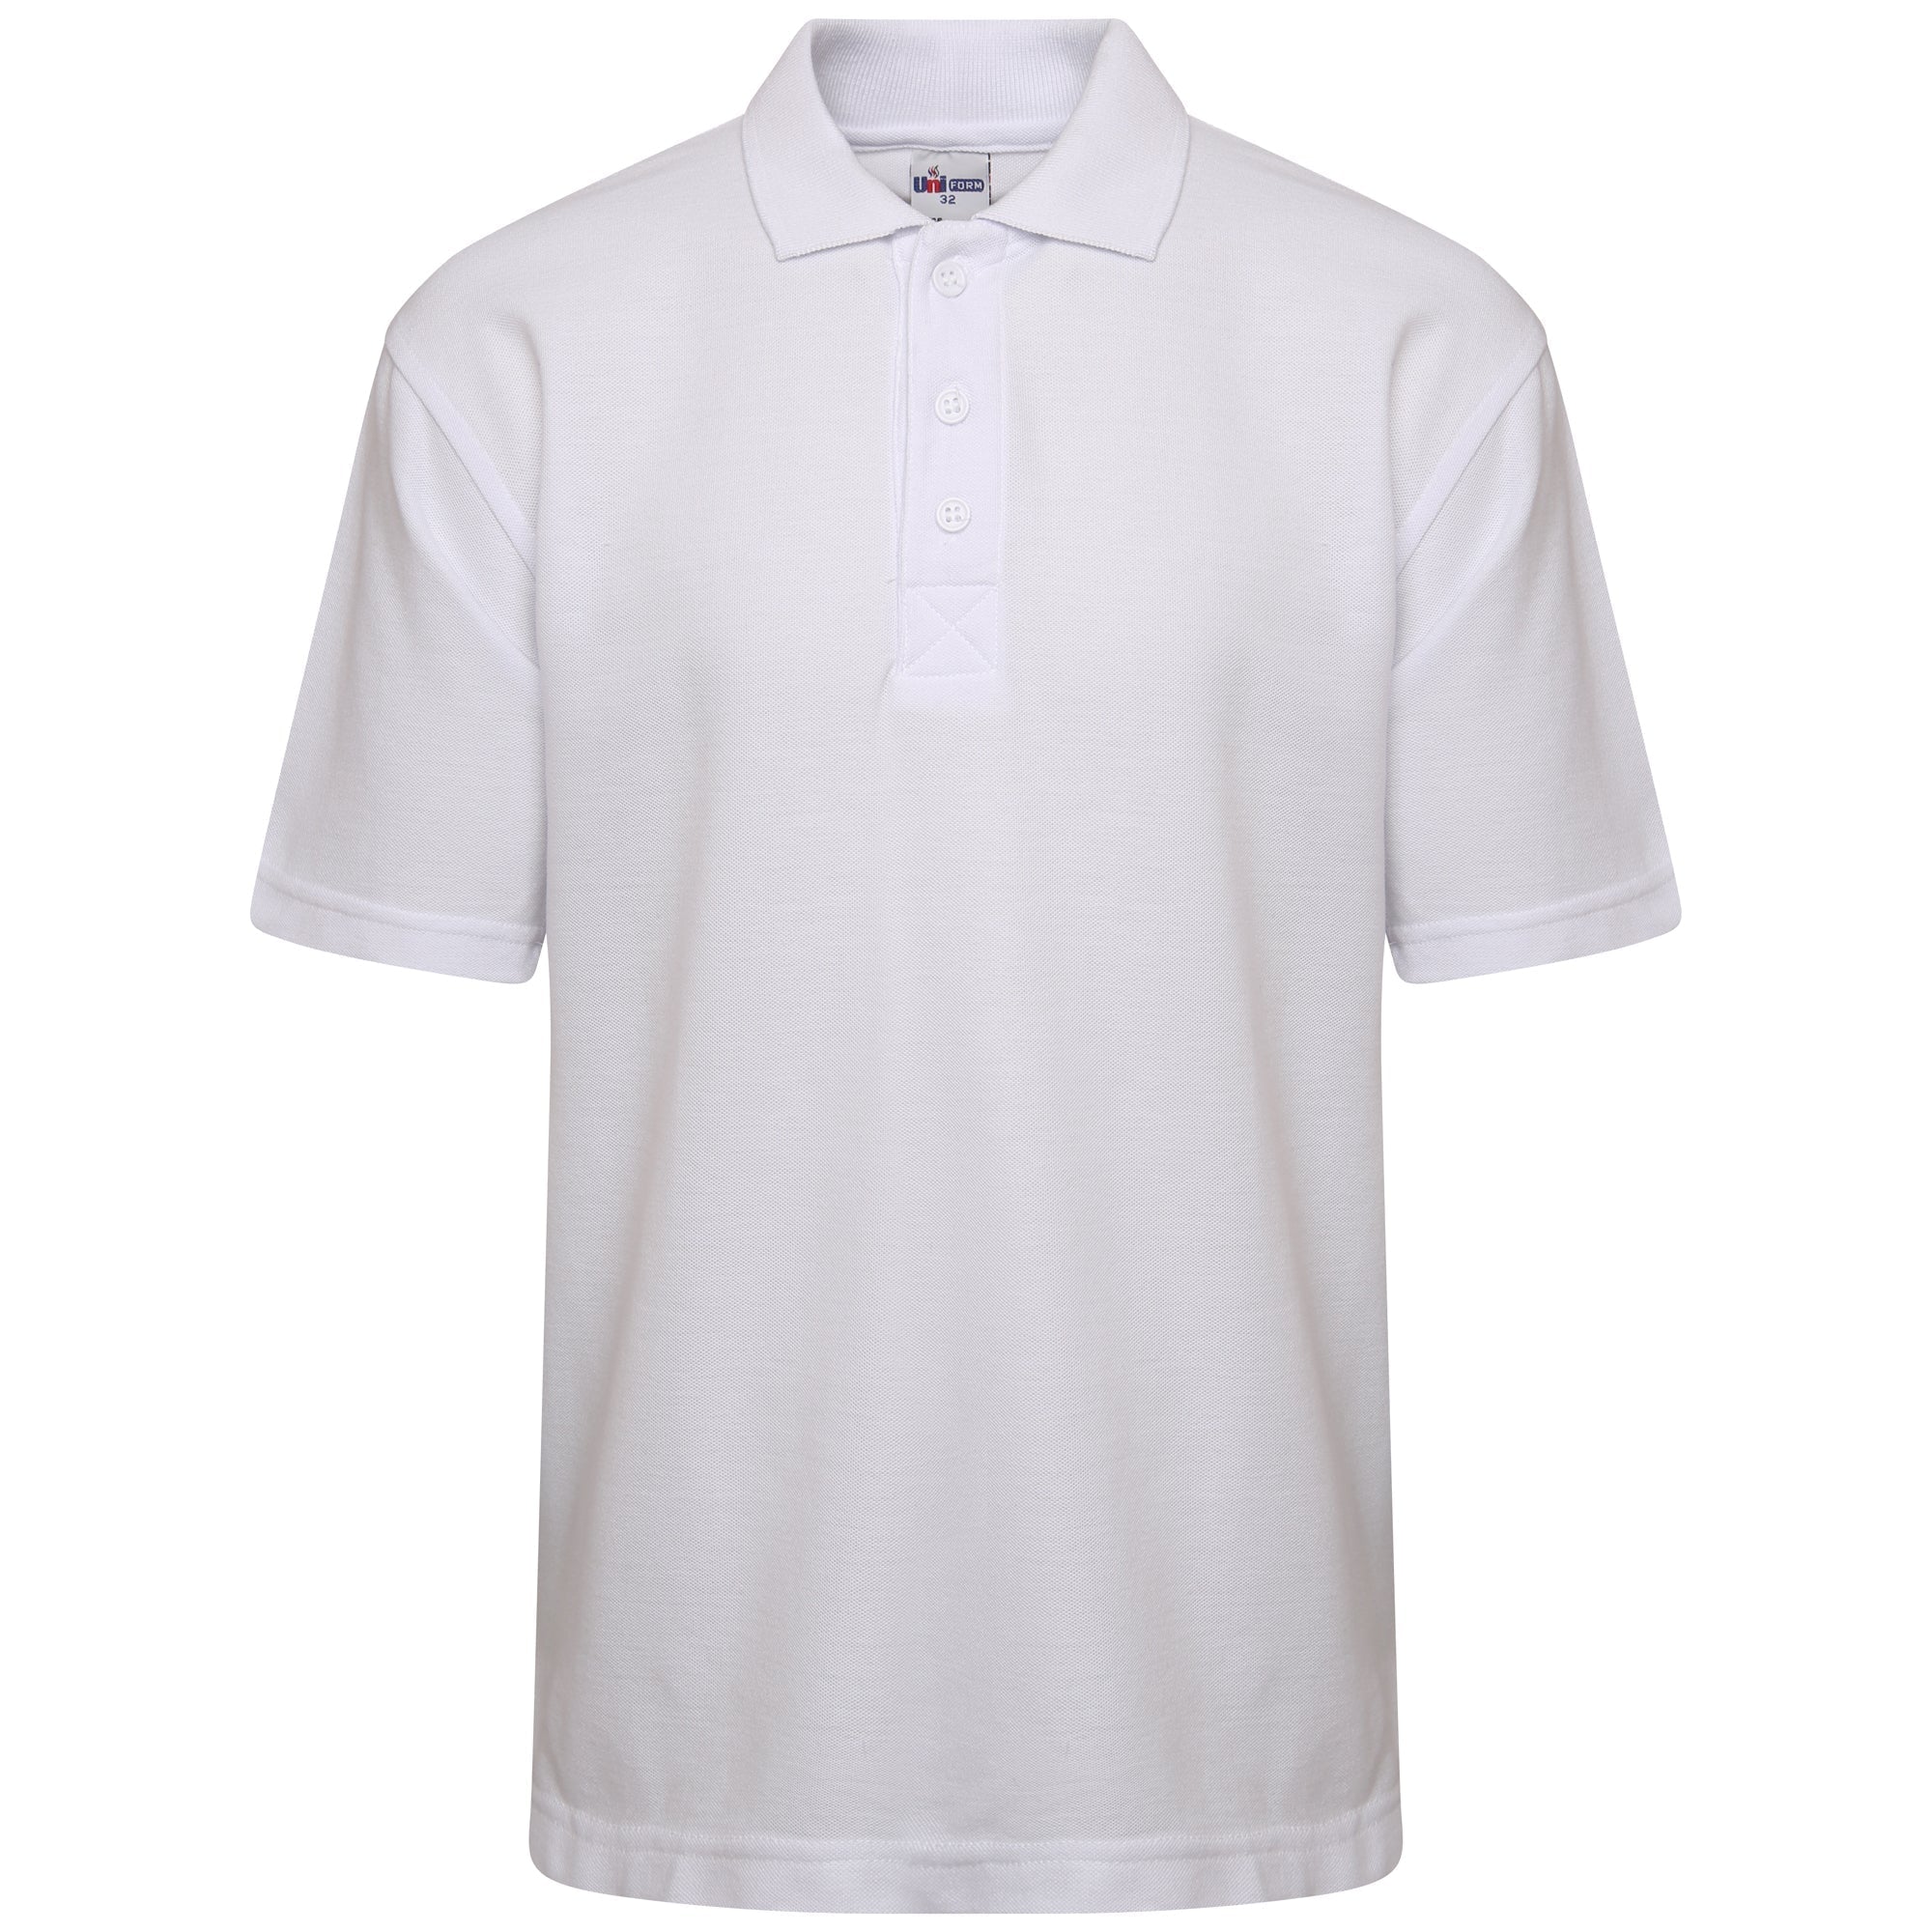 White Polo T Shirts Plain School Uniform  Kids T Shirt Boys Girls Tee Top Sports